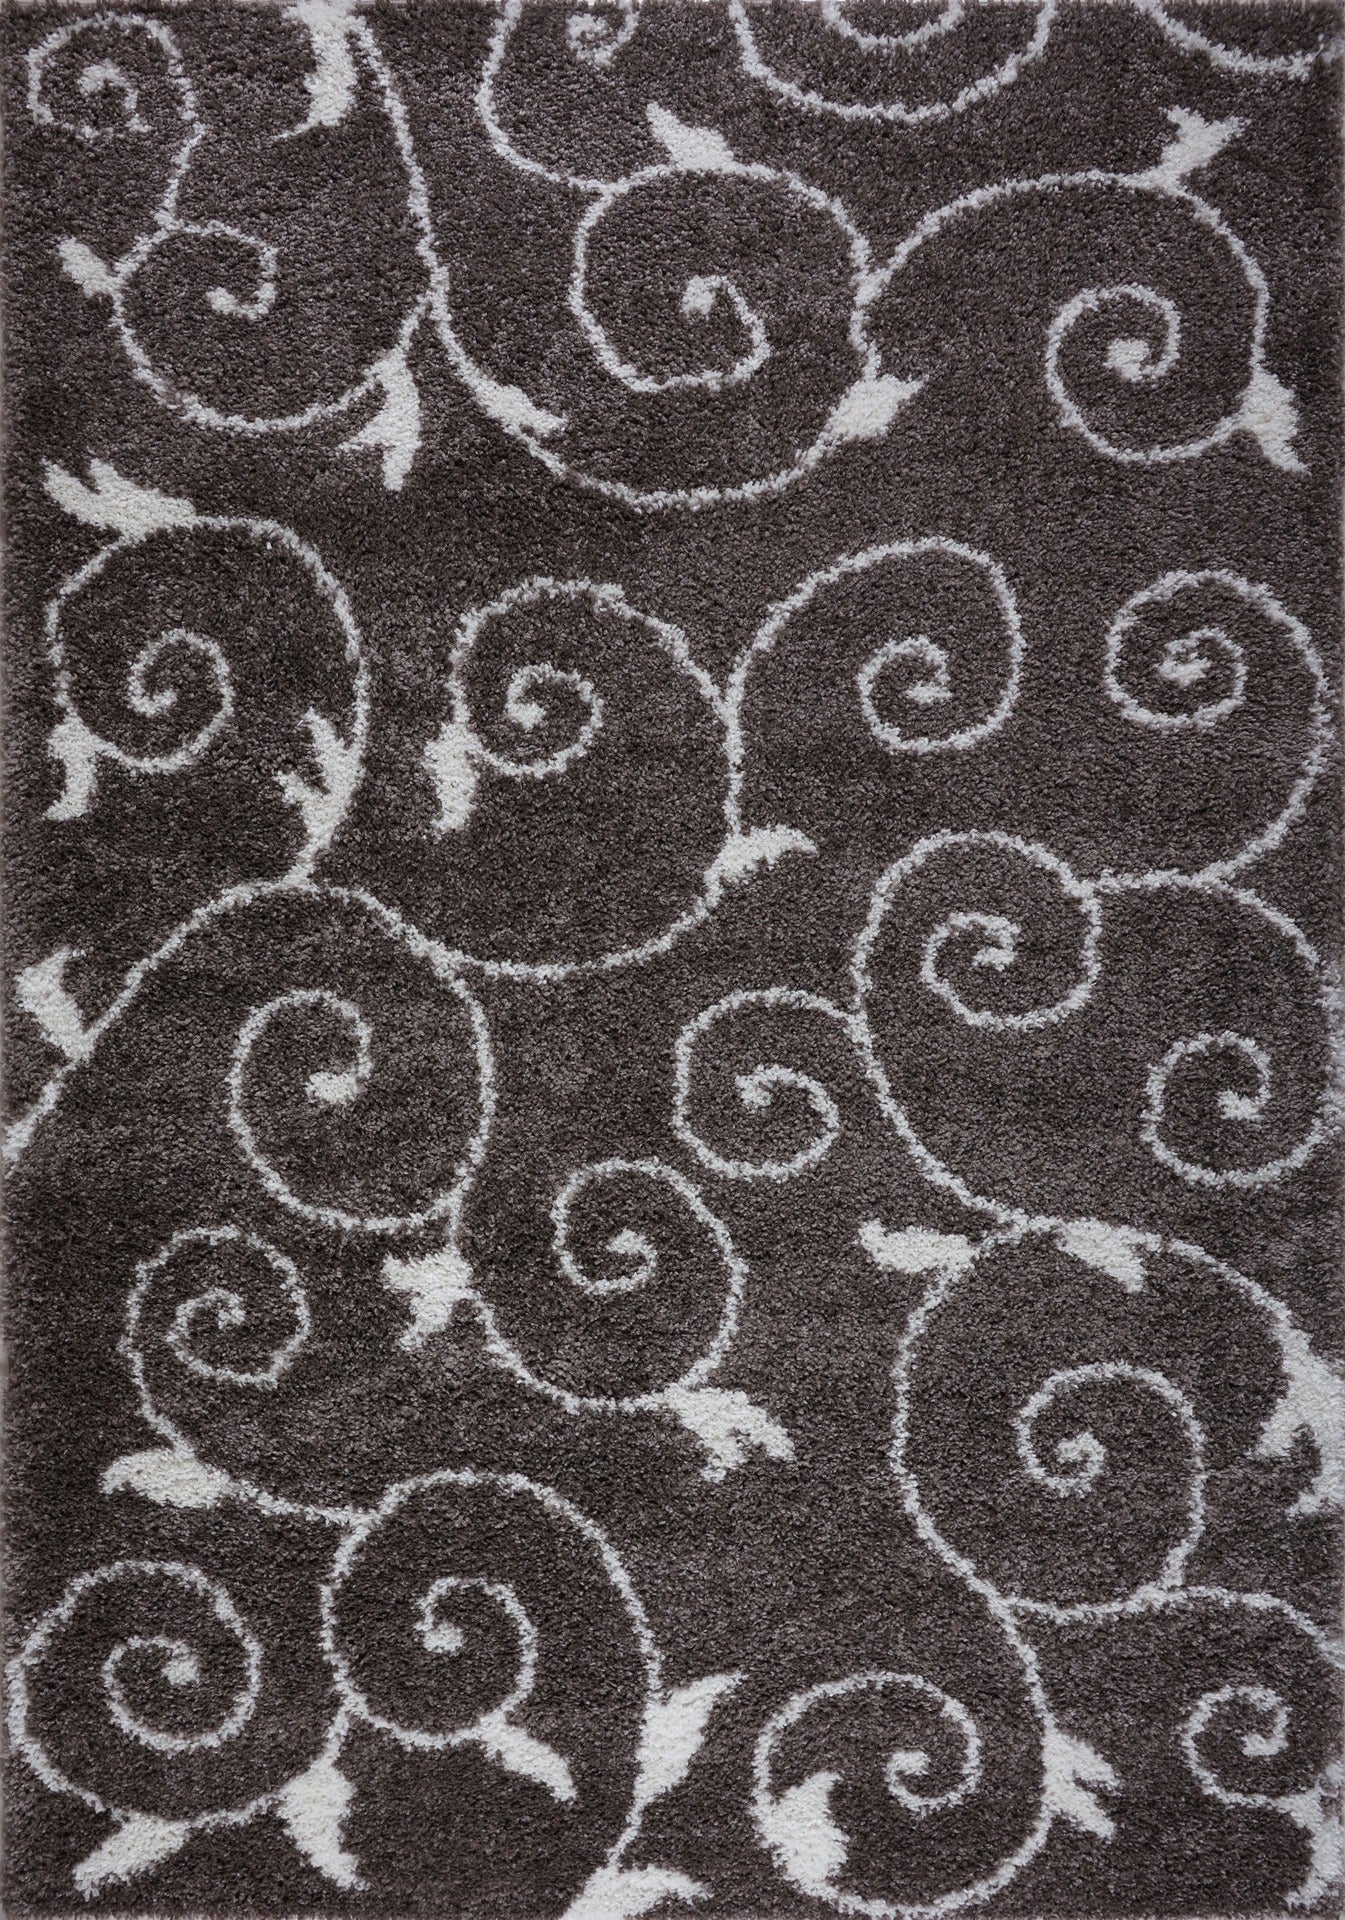 Shaggy Rabat Abstract Pattern Sustainable Spirals Style Indoor Big Runner Rug, Mink White, 2'7" x 9'10" (80 cm x 300 cm)